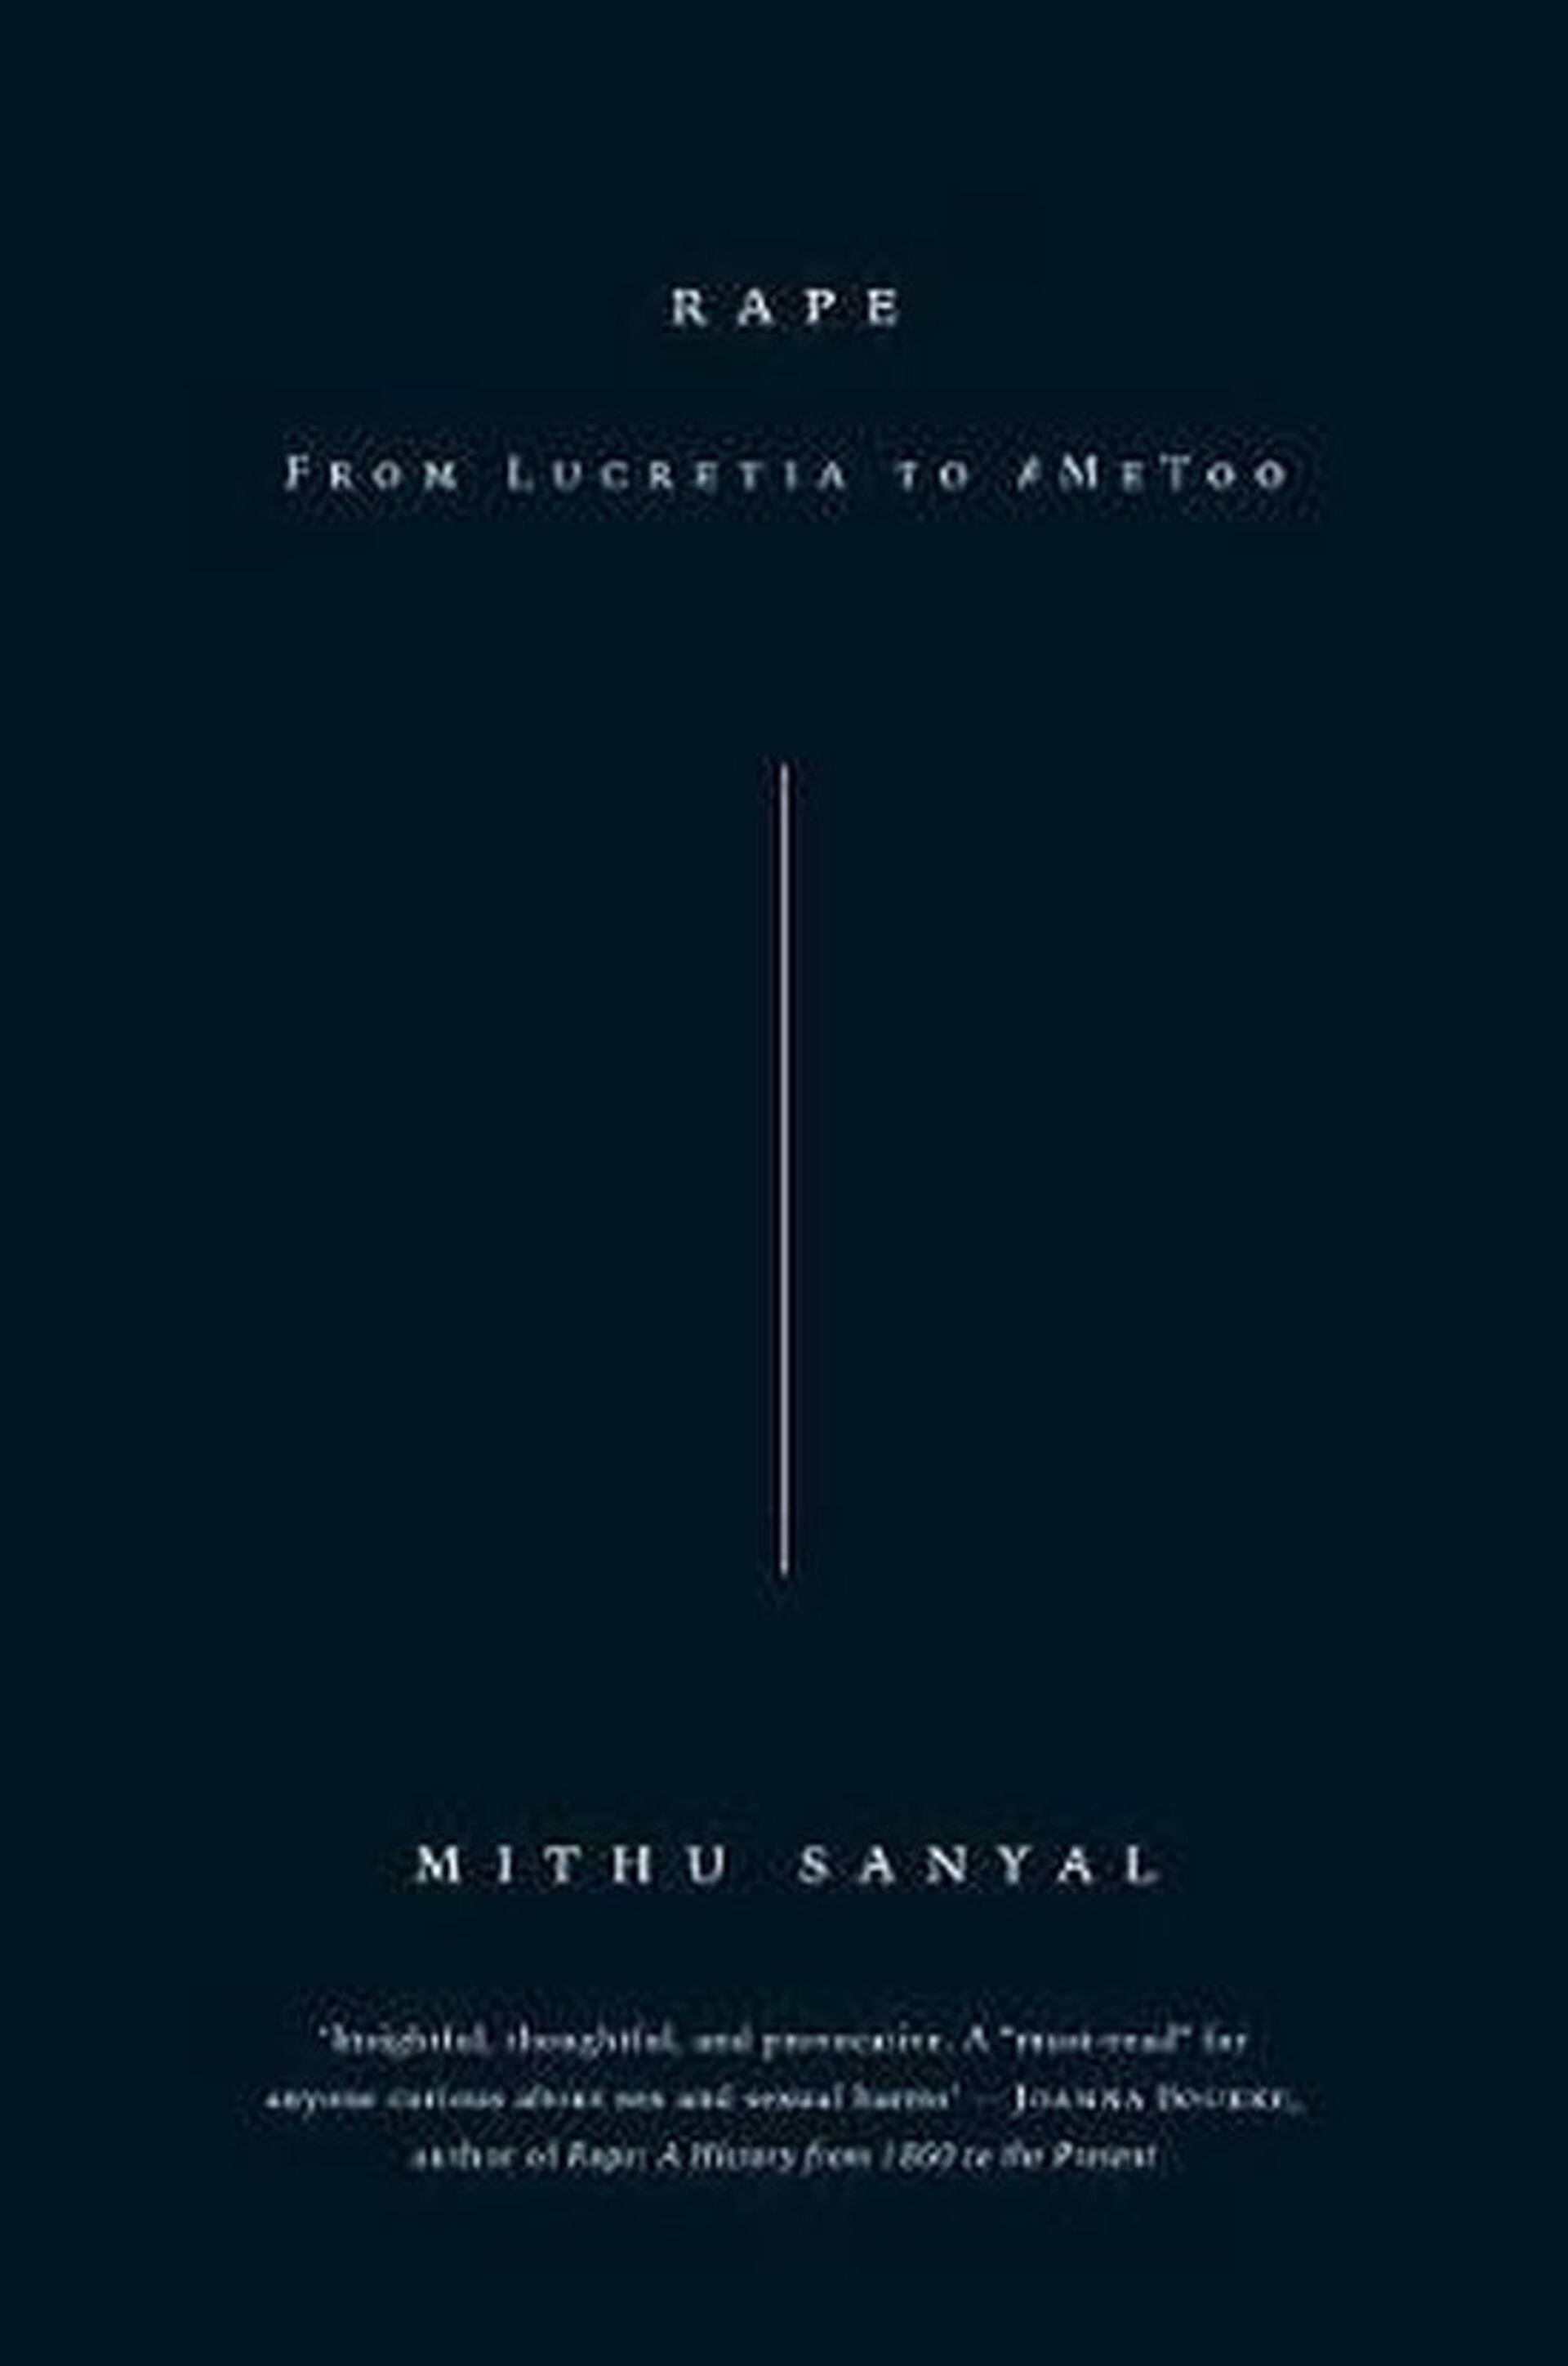 #629 - Willemijn Ruberg bespreekt Mithu Sanyal’s ‘Rape: From Lucretia to #MeToo’